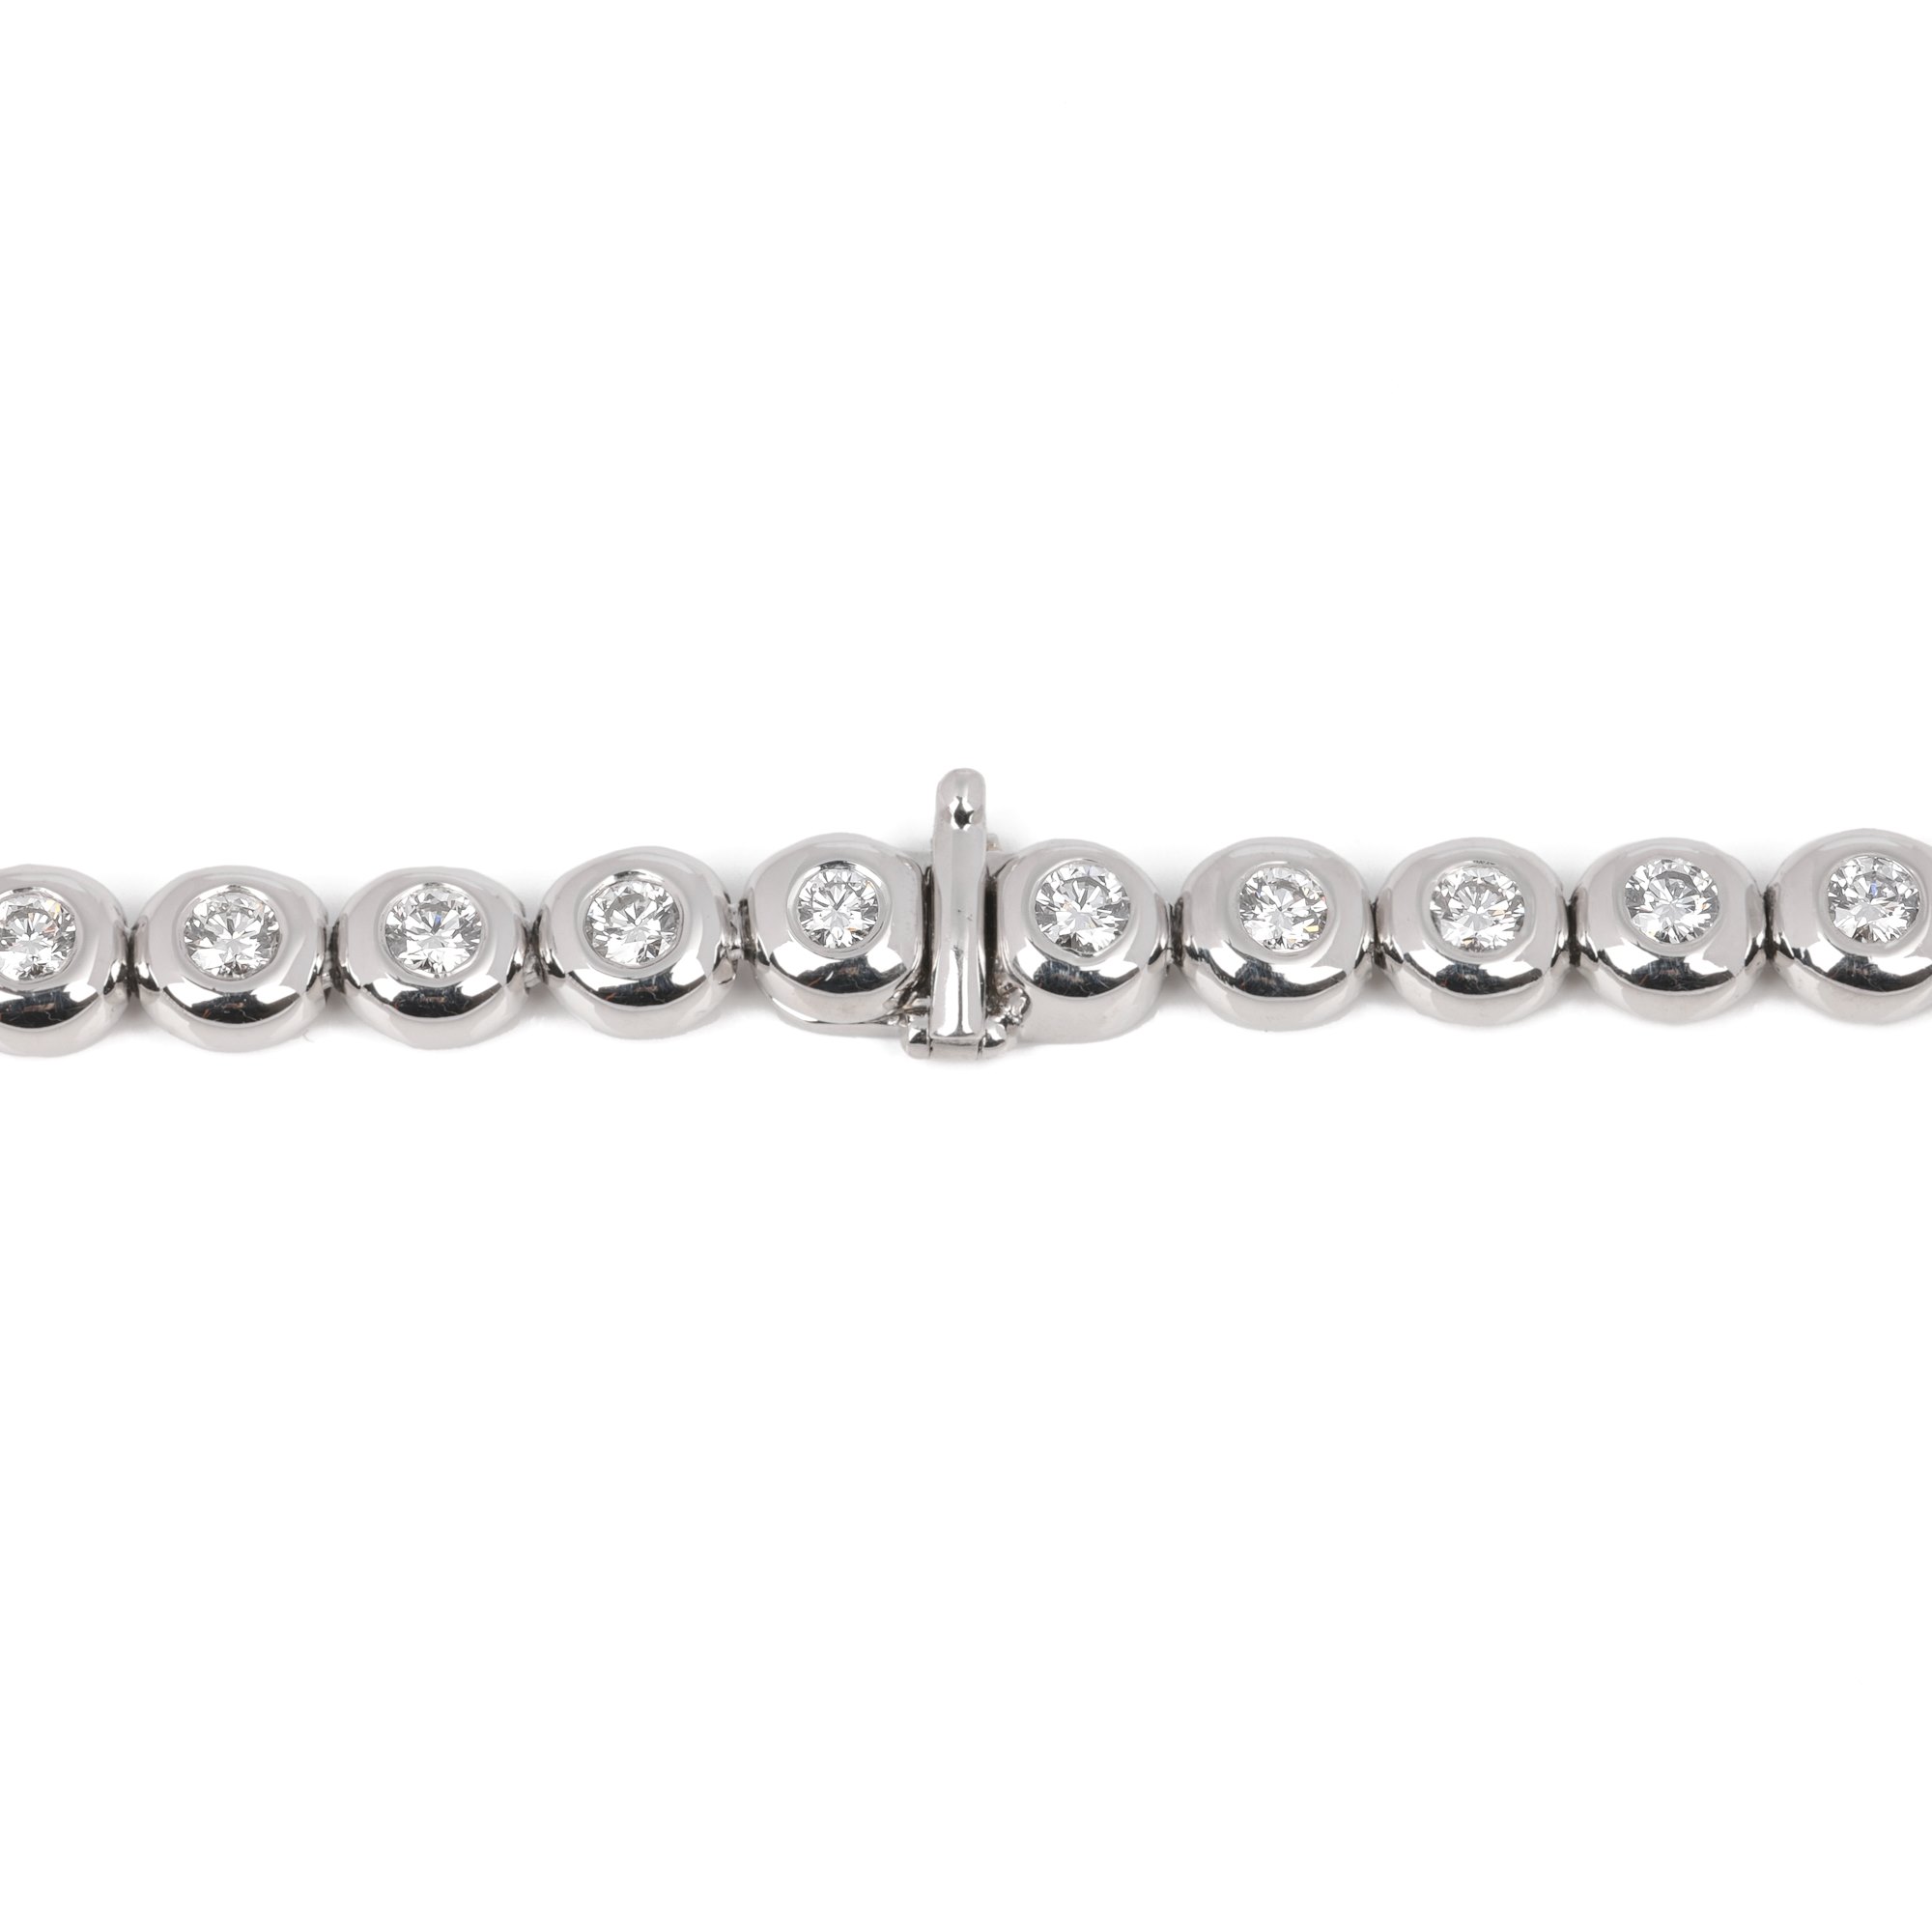 Tiffany & Co. Bezel Set Diamond Tennis Necklace